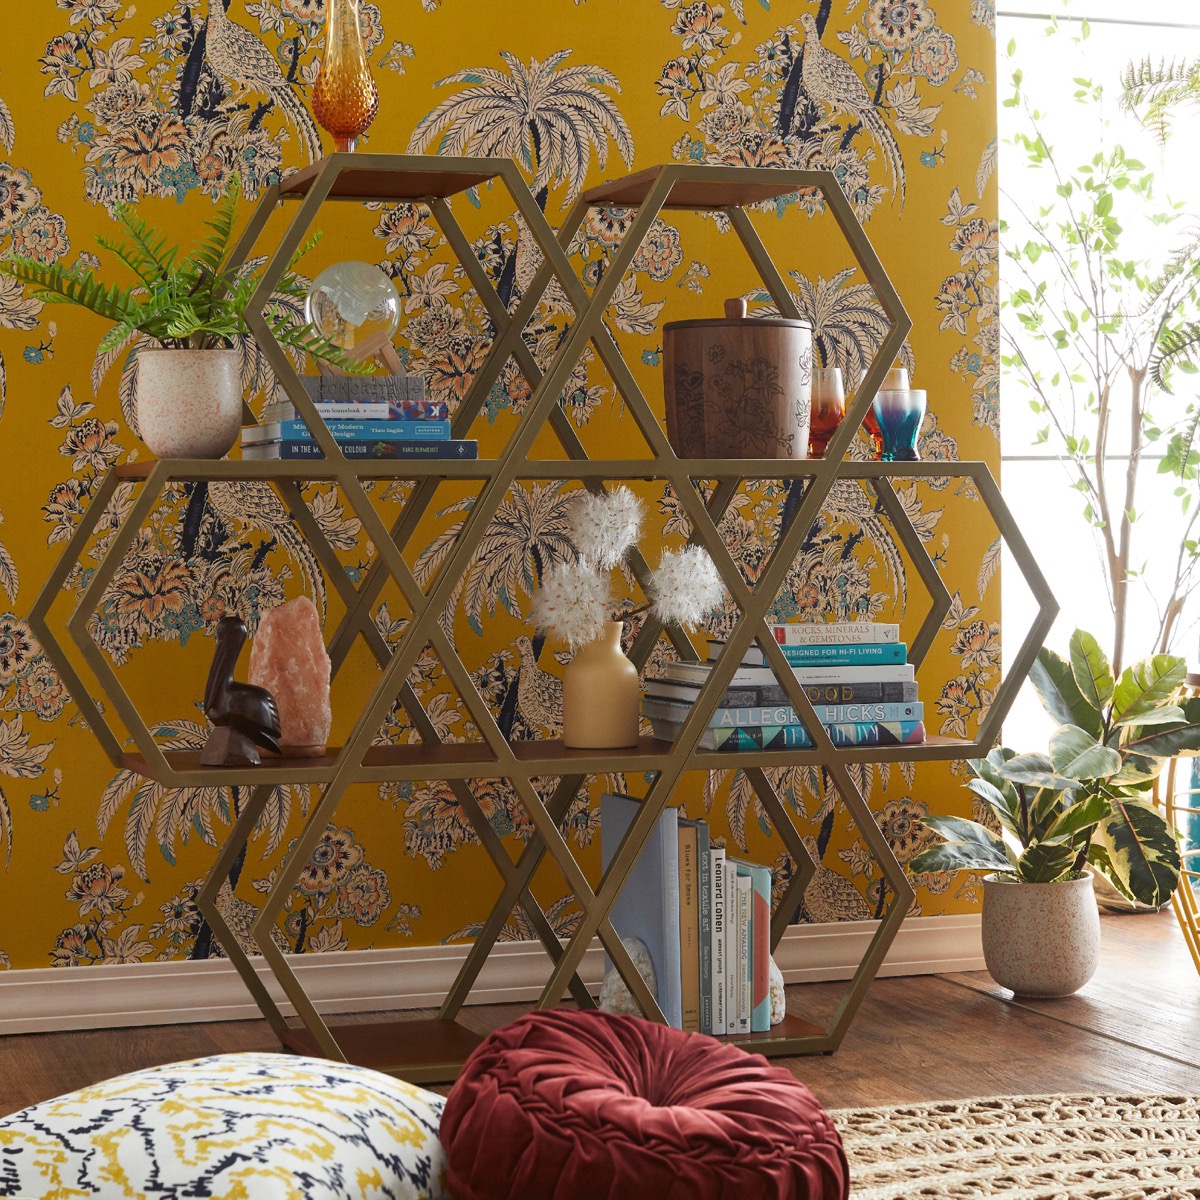 Drew Barrymore Collection hexagon bookshelf against wallpaper